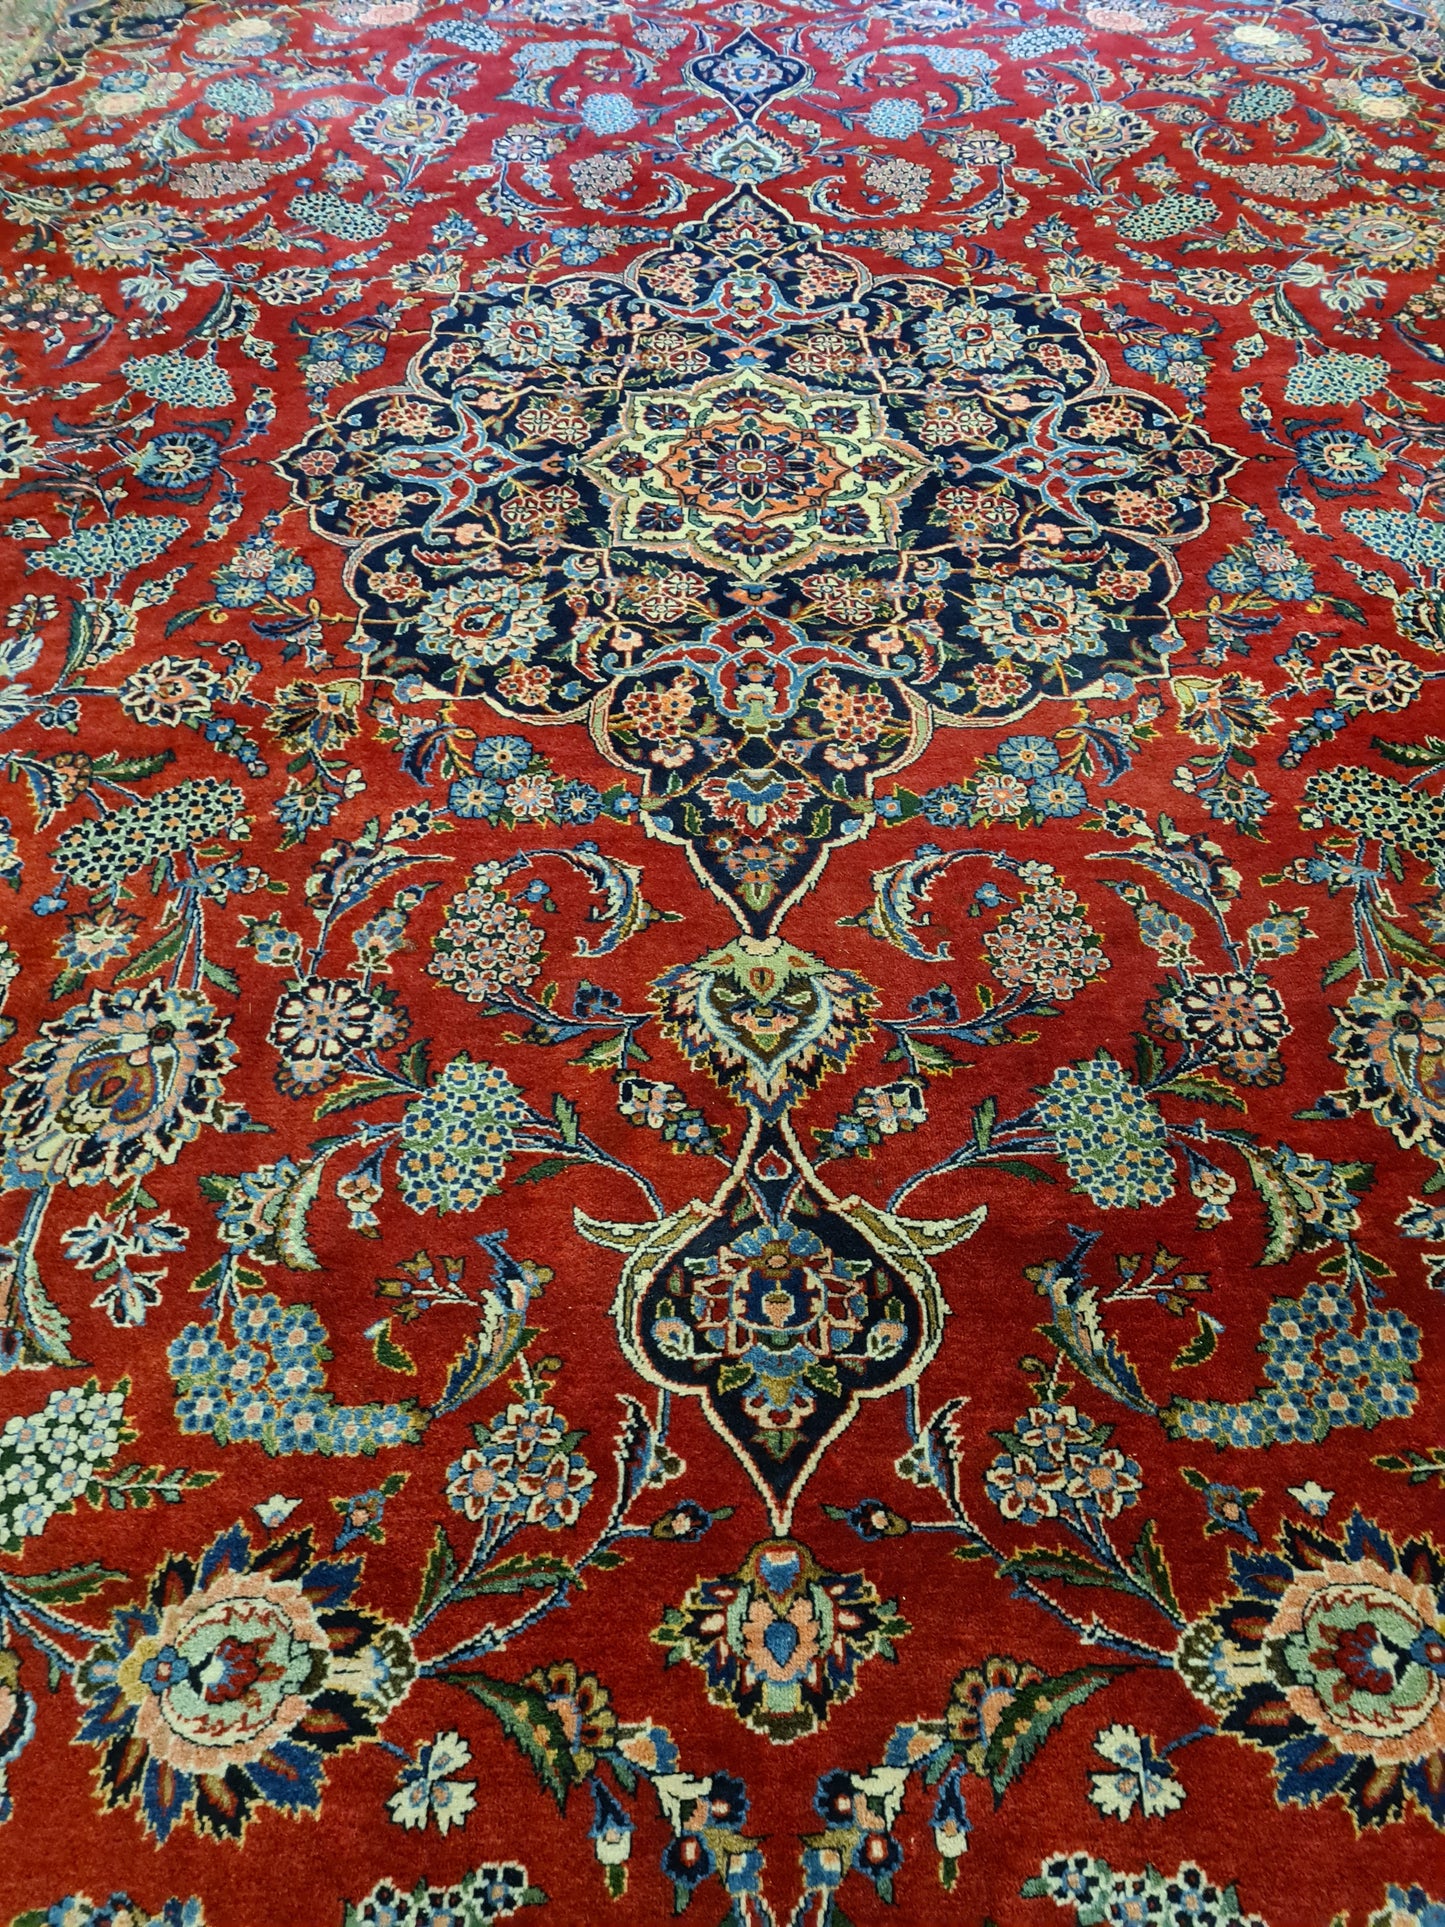 Palast-Teppich: Antiker Keshan Perserteppich Orientteppich 440x315cm